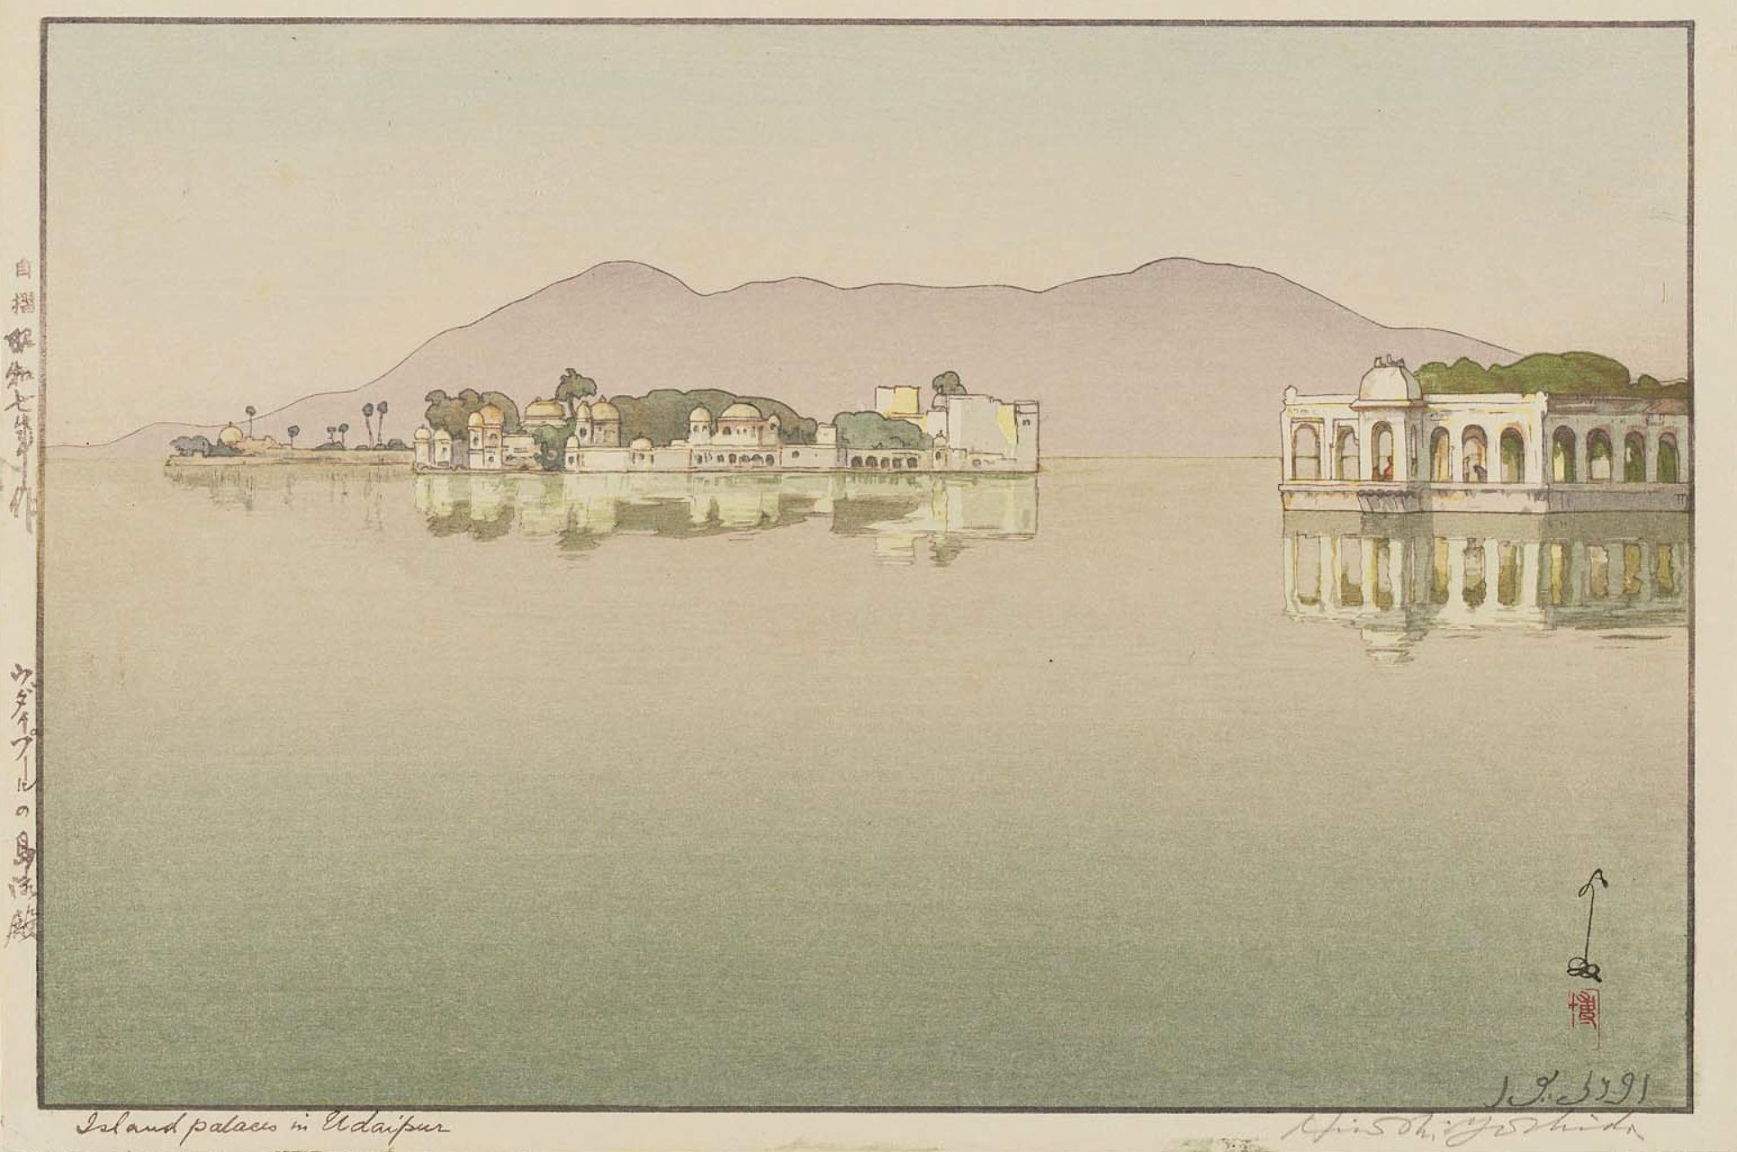 Island Palaces in Udaipur woodblock print